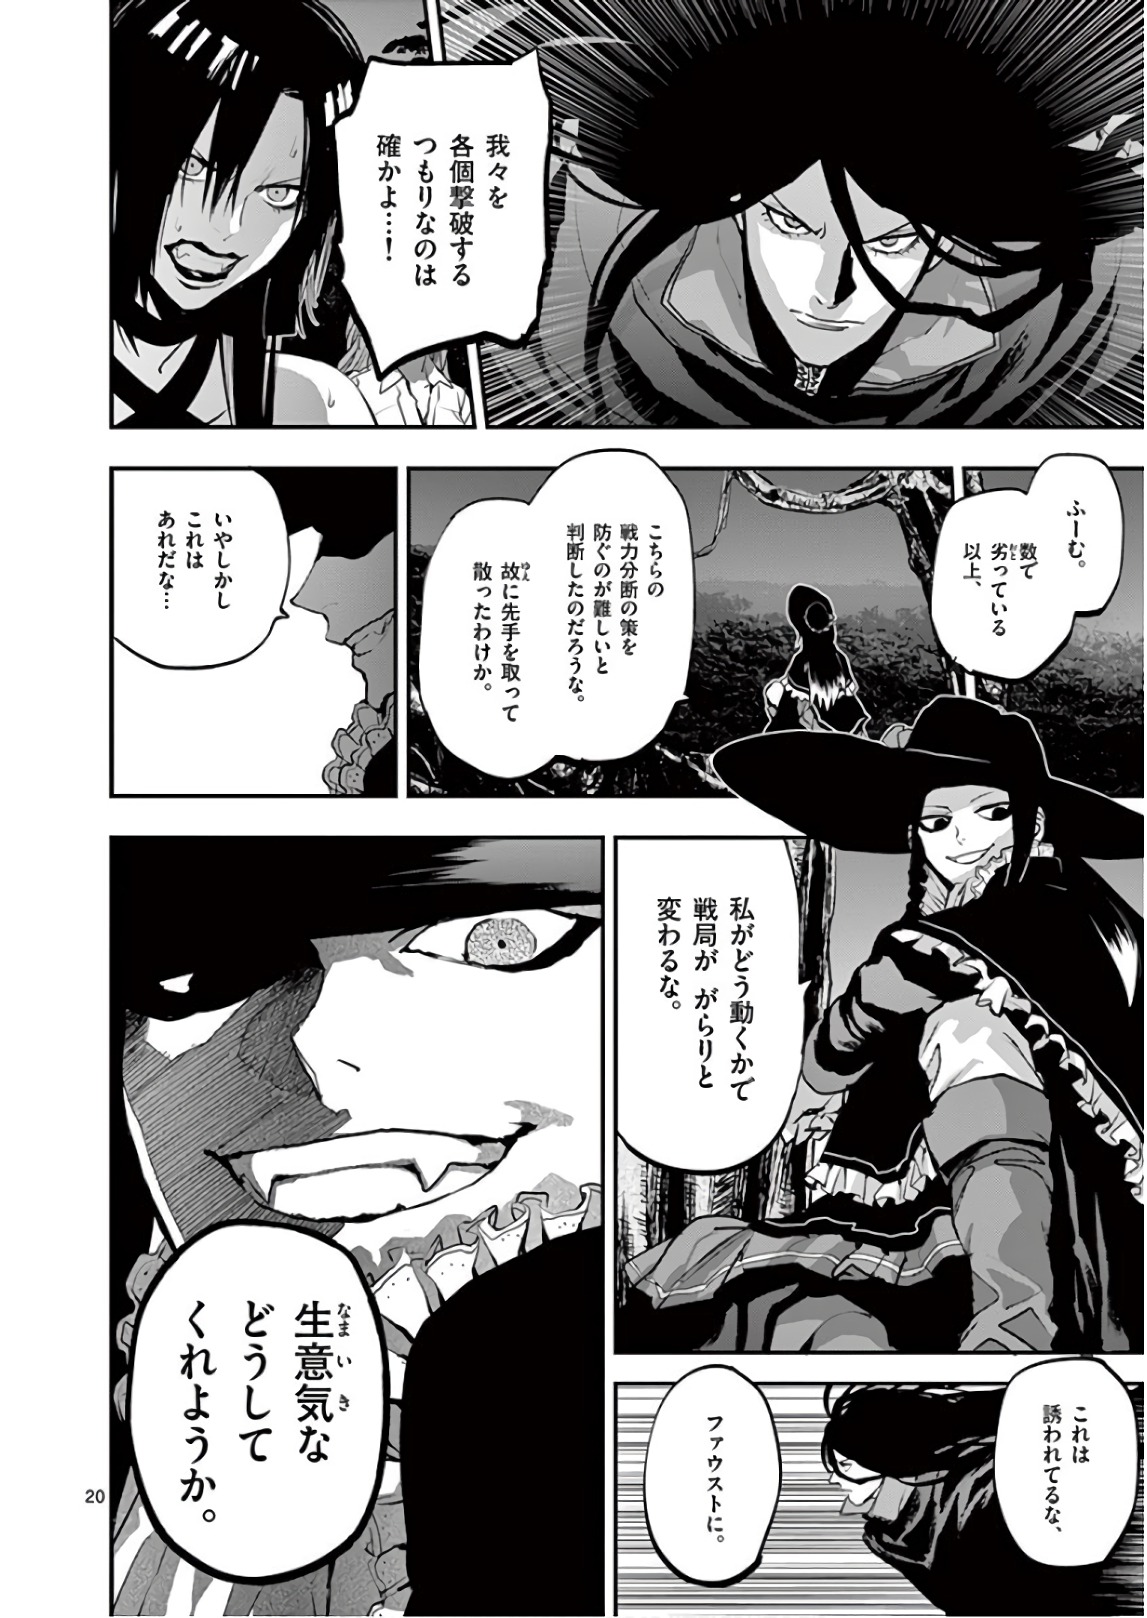 Ginrou Bloodborne - Chapter 79 - Page 20